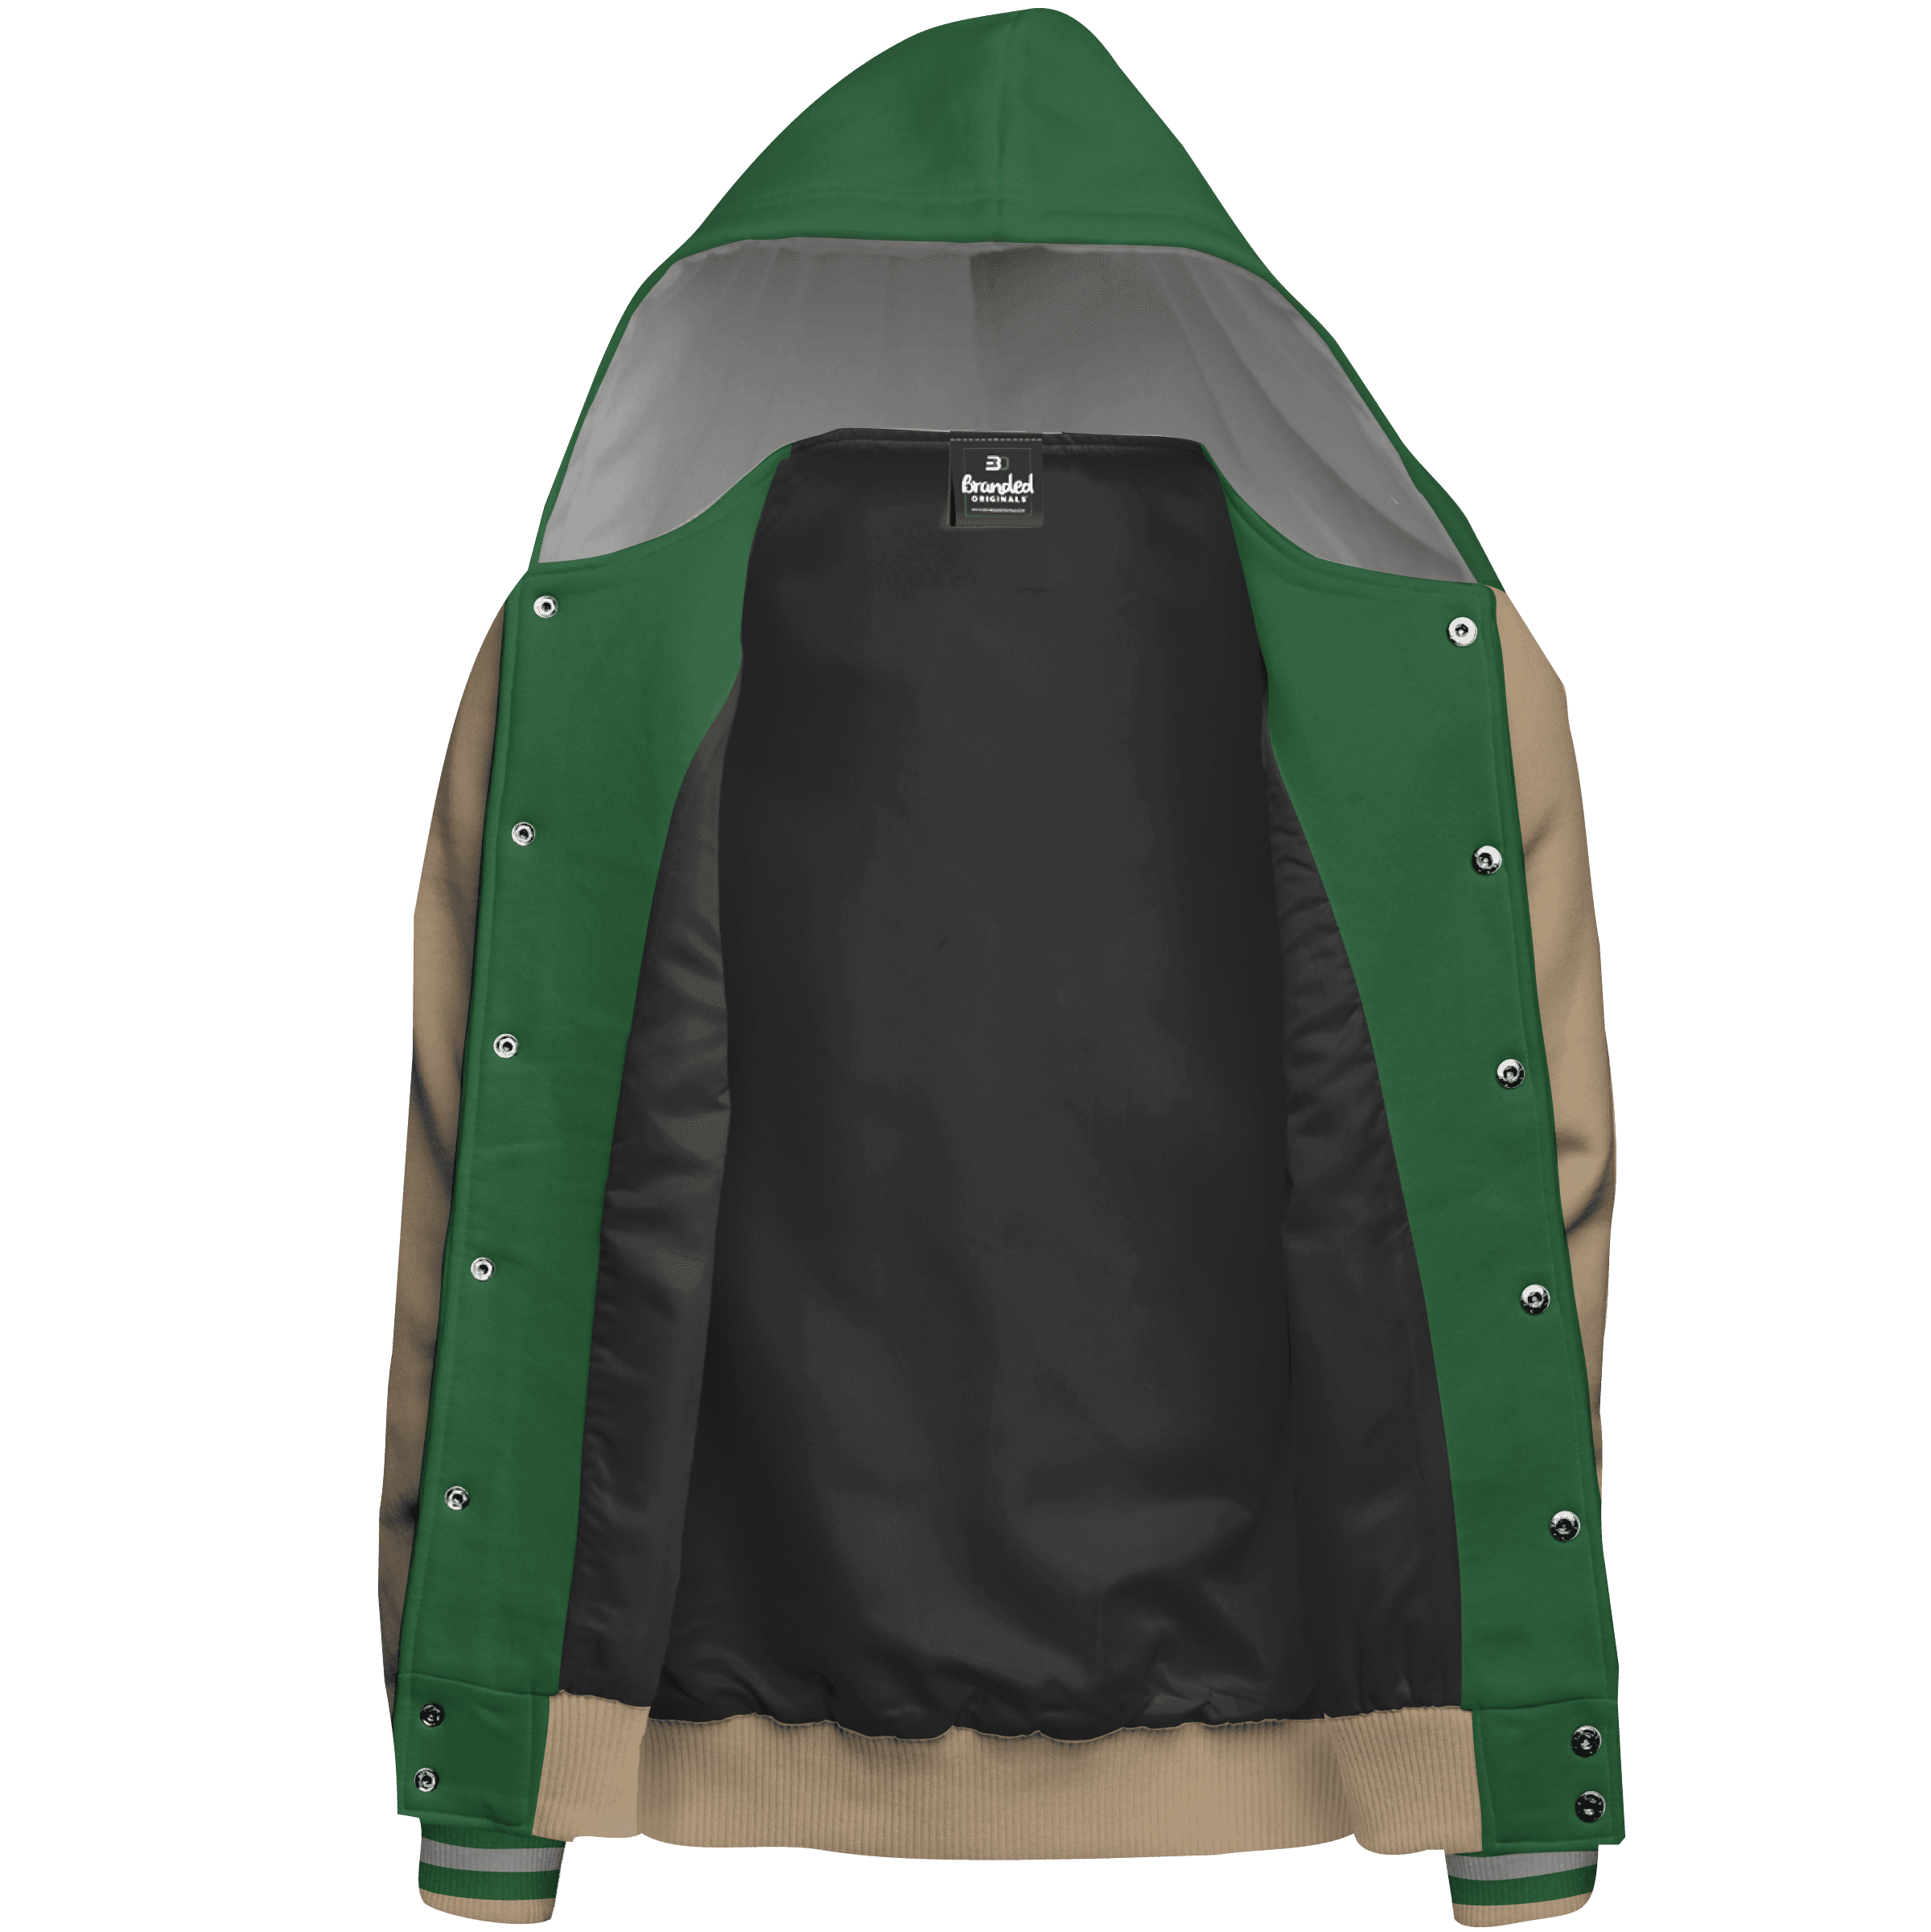 Hooded Cotton Fleece Varsity Jacket With Black Satin Lining